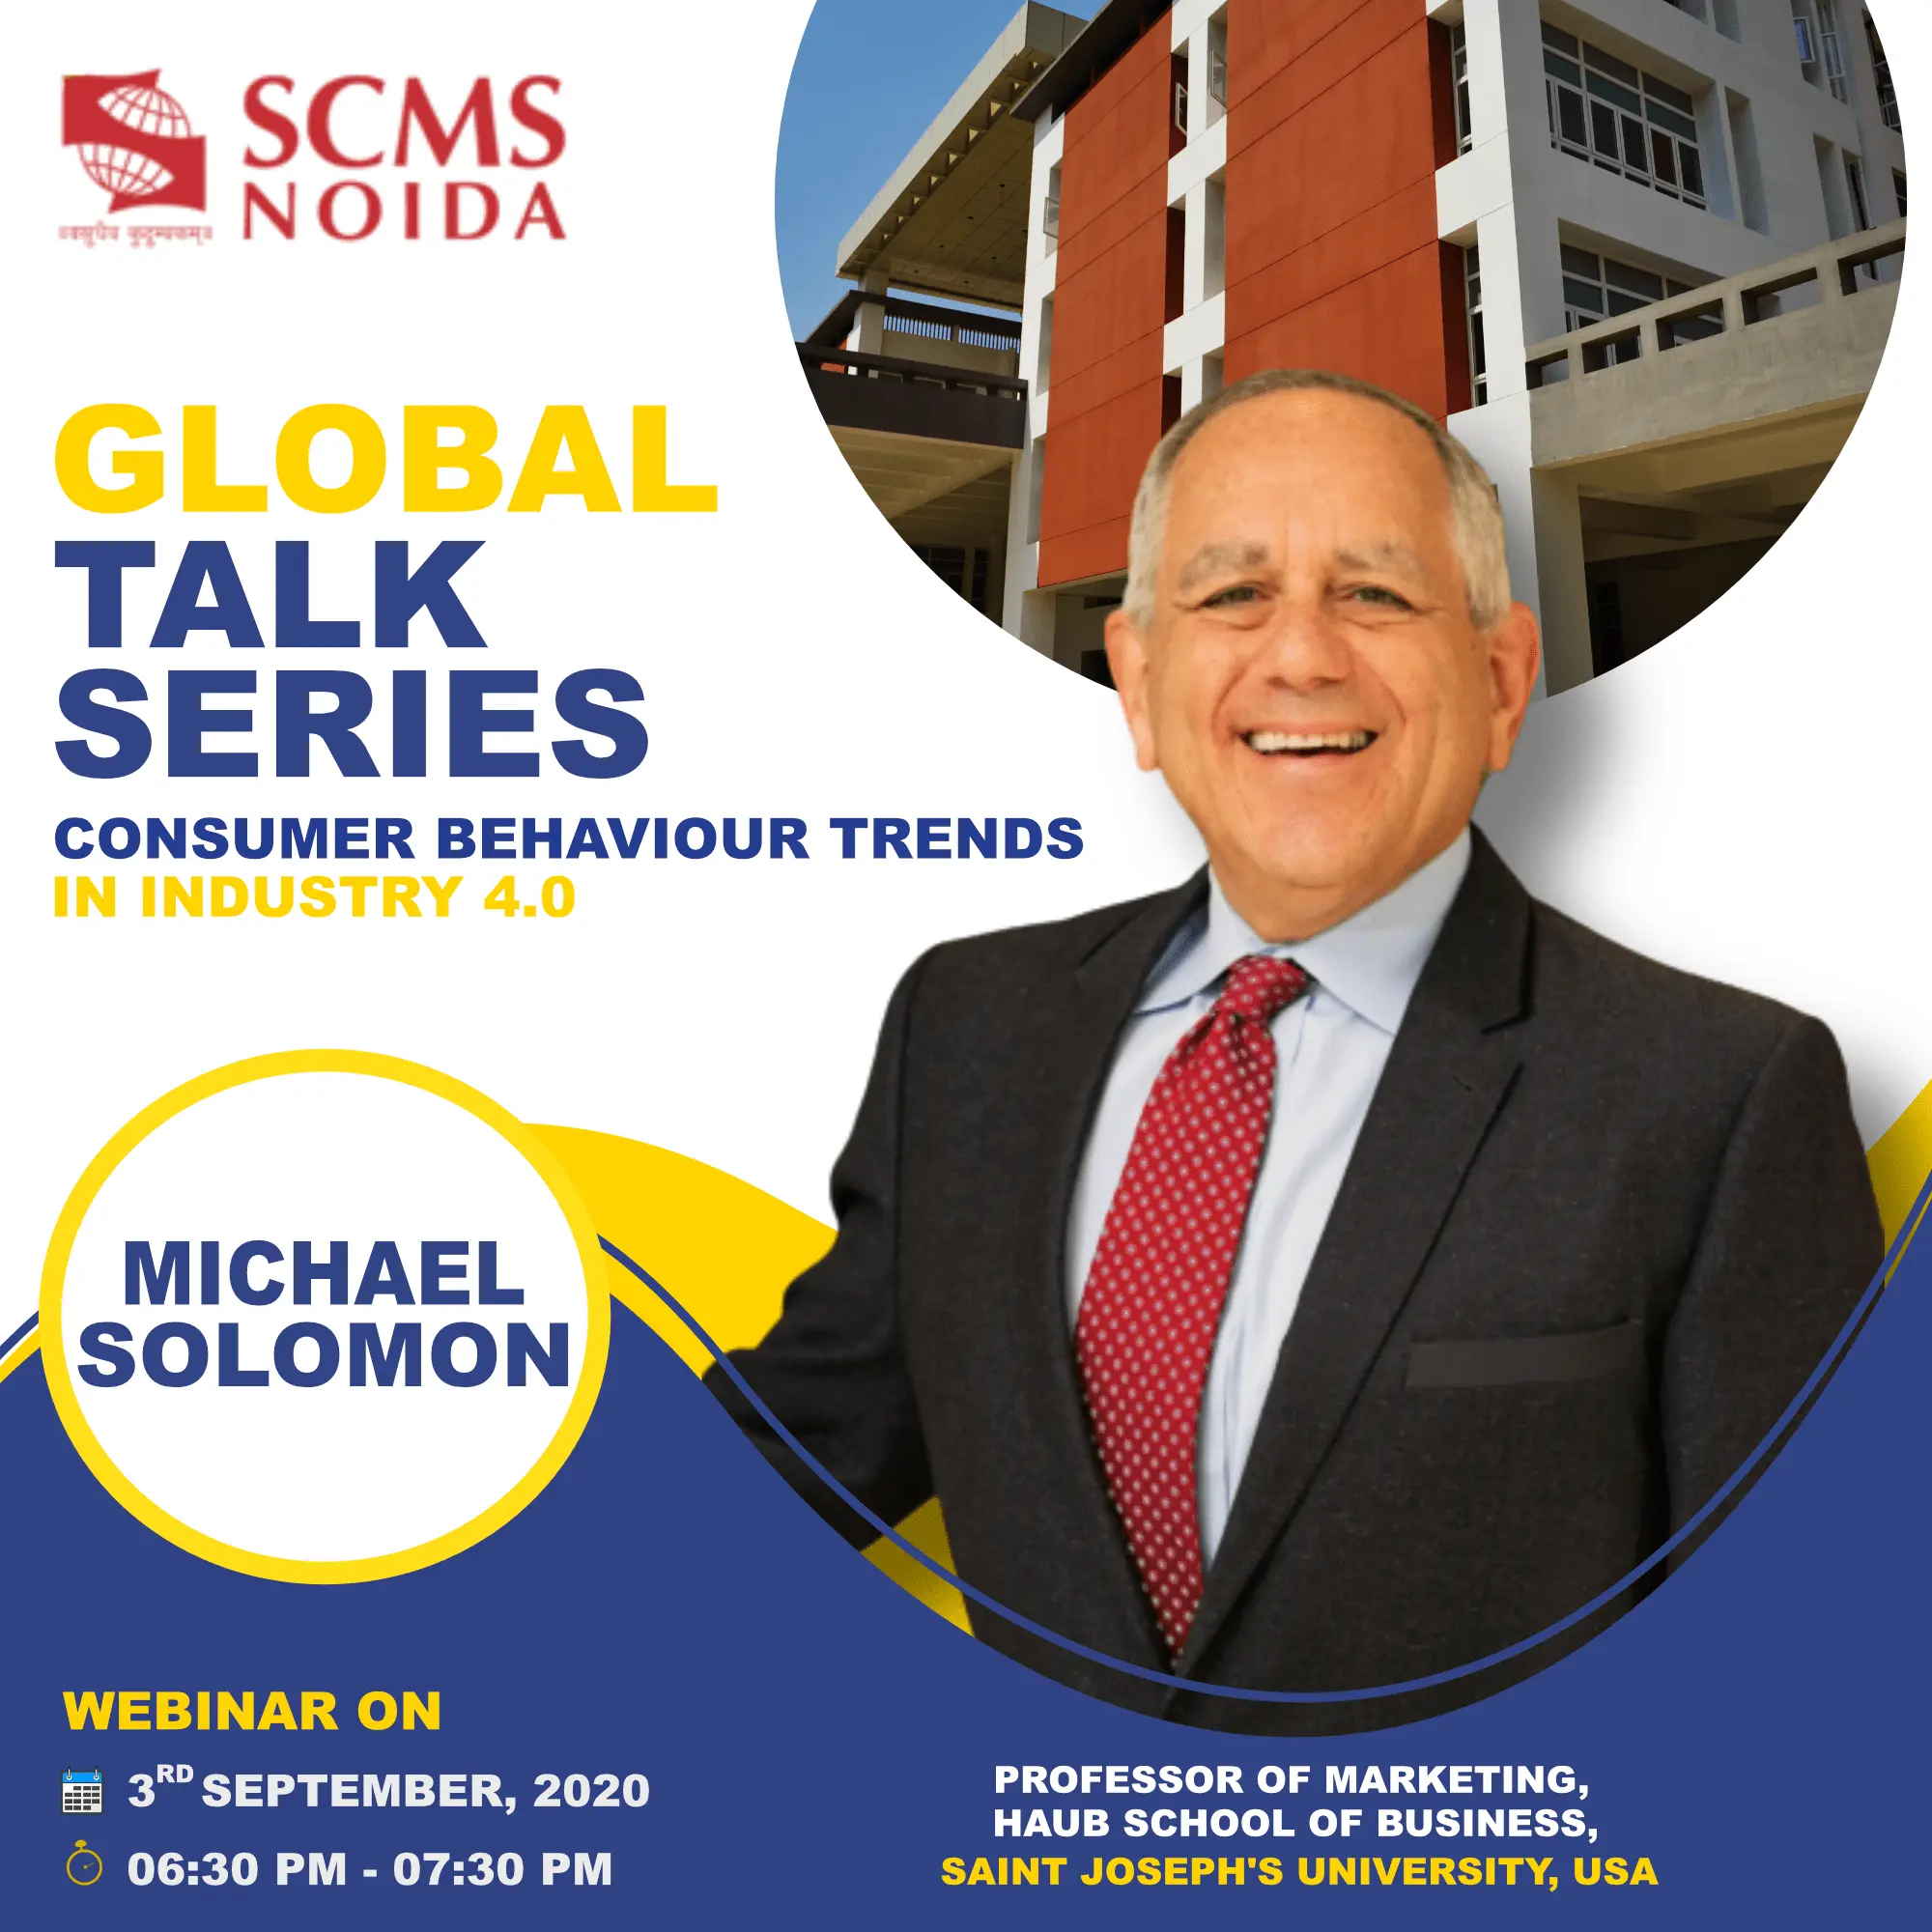 Michael Solomon at SCMS NOIDA